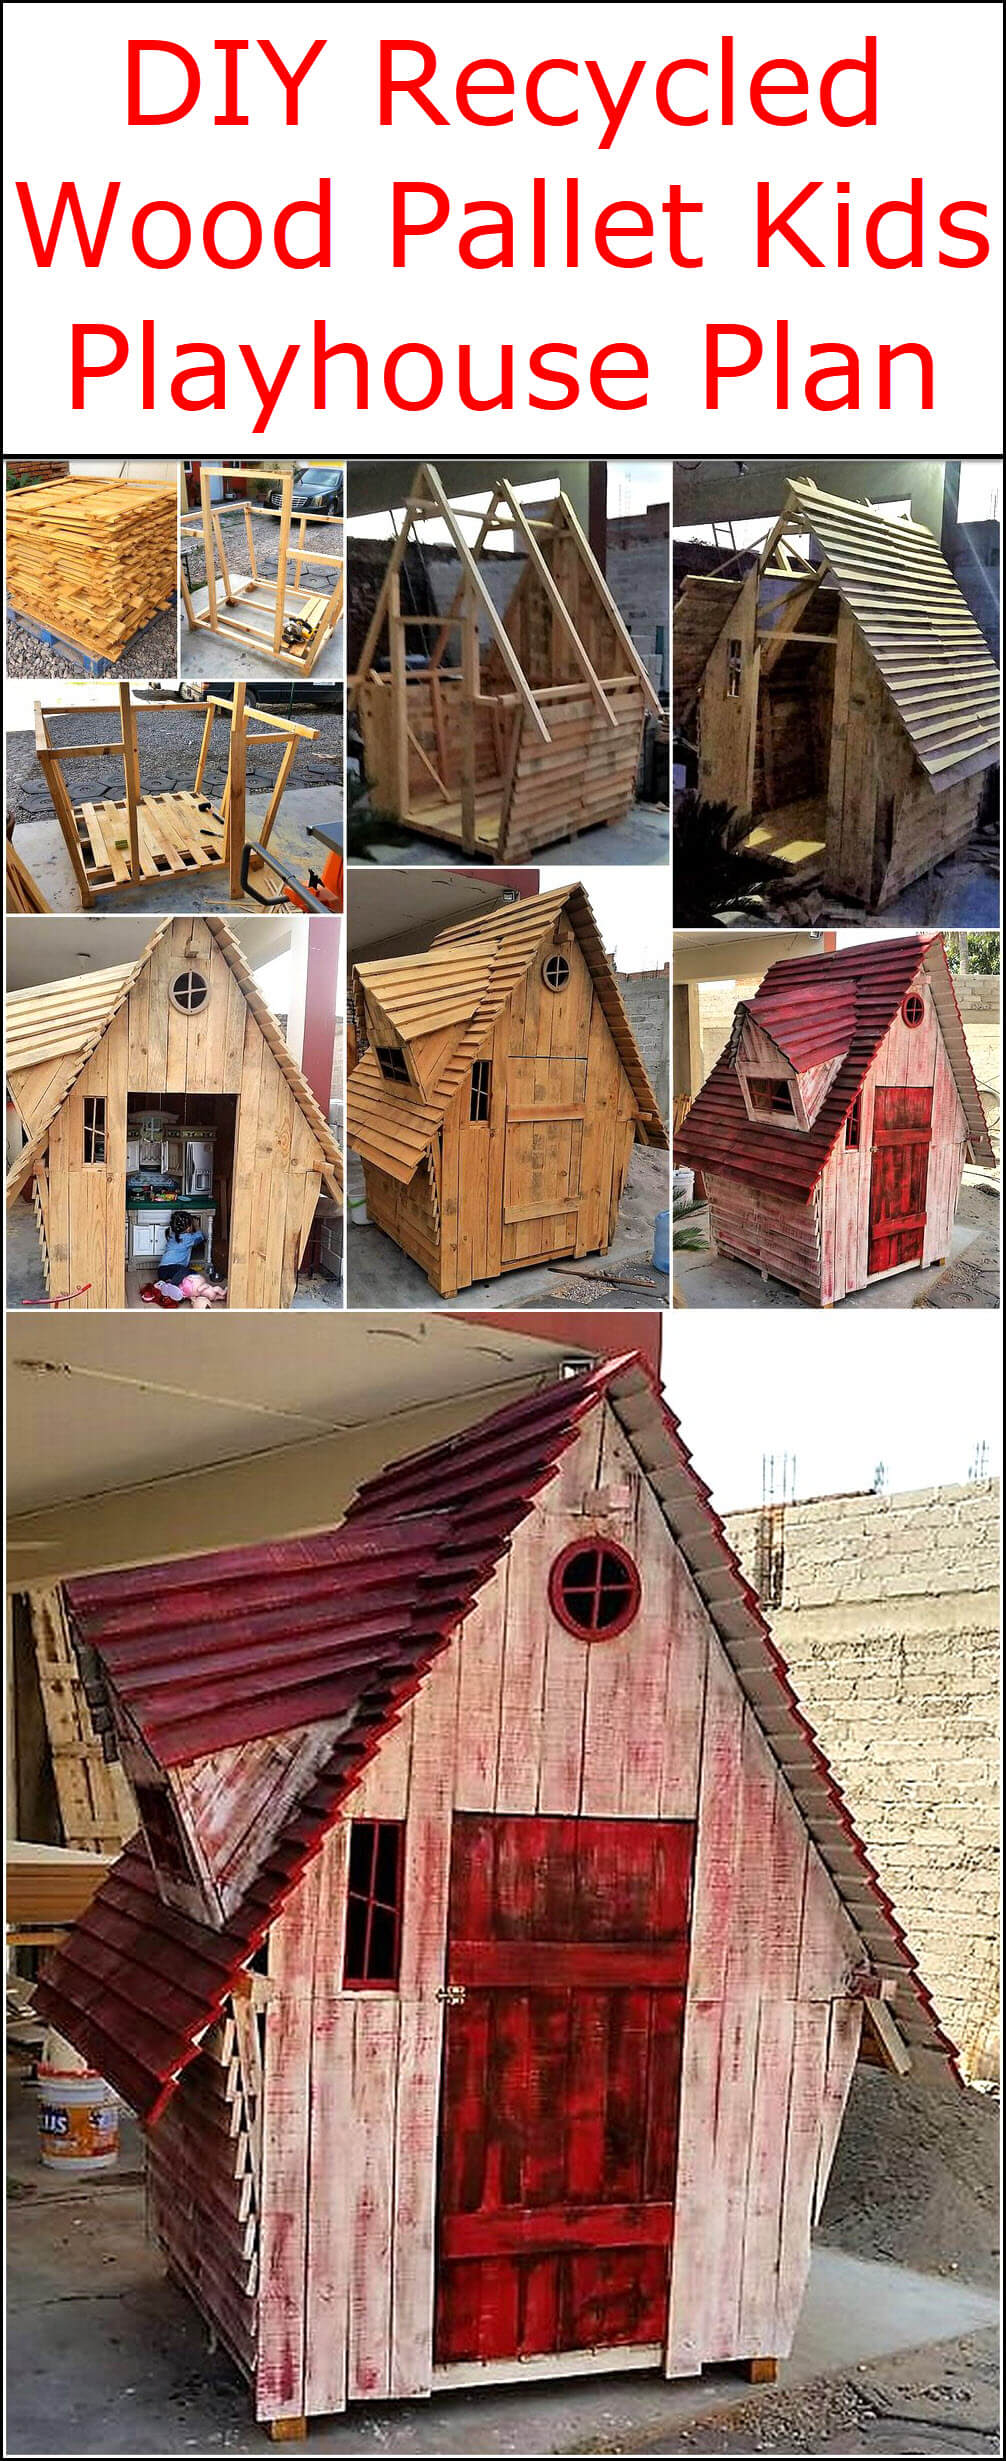 wooden playhouse designs